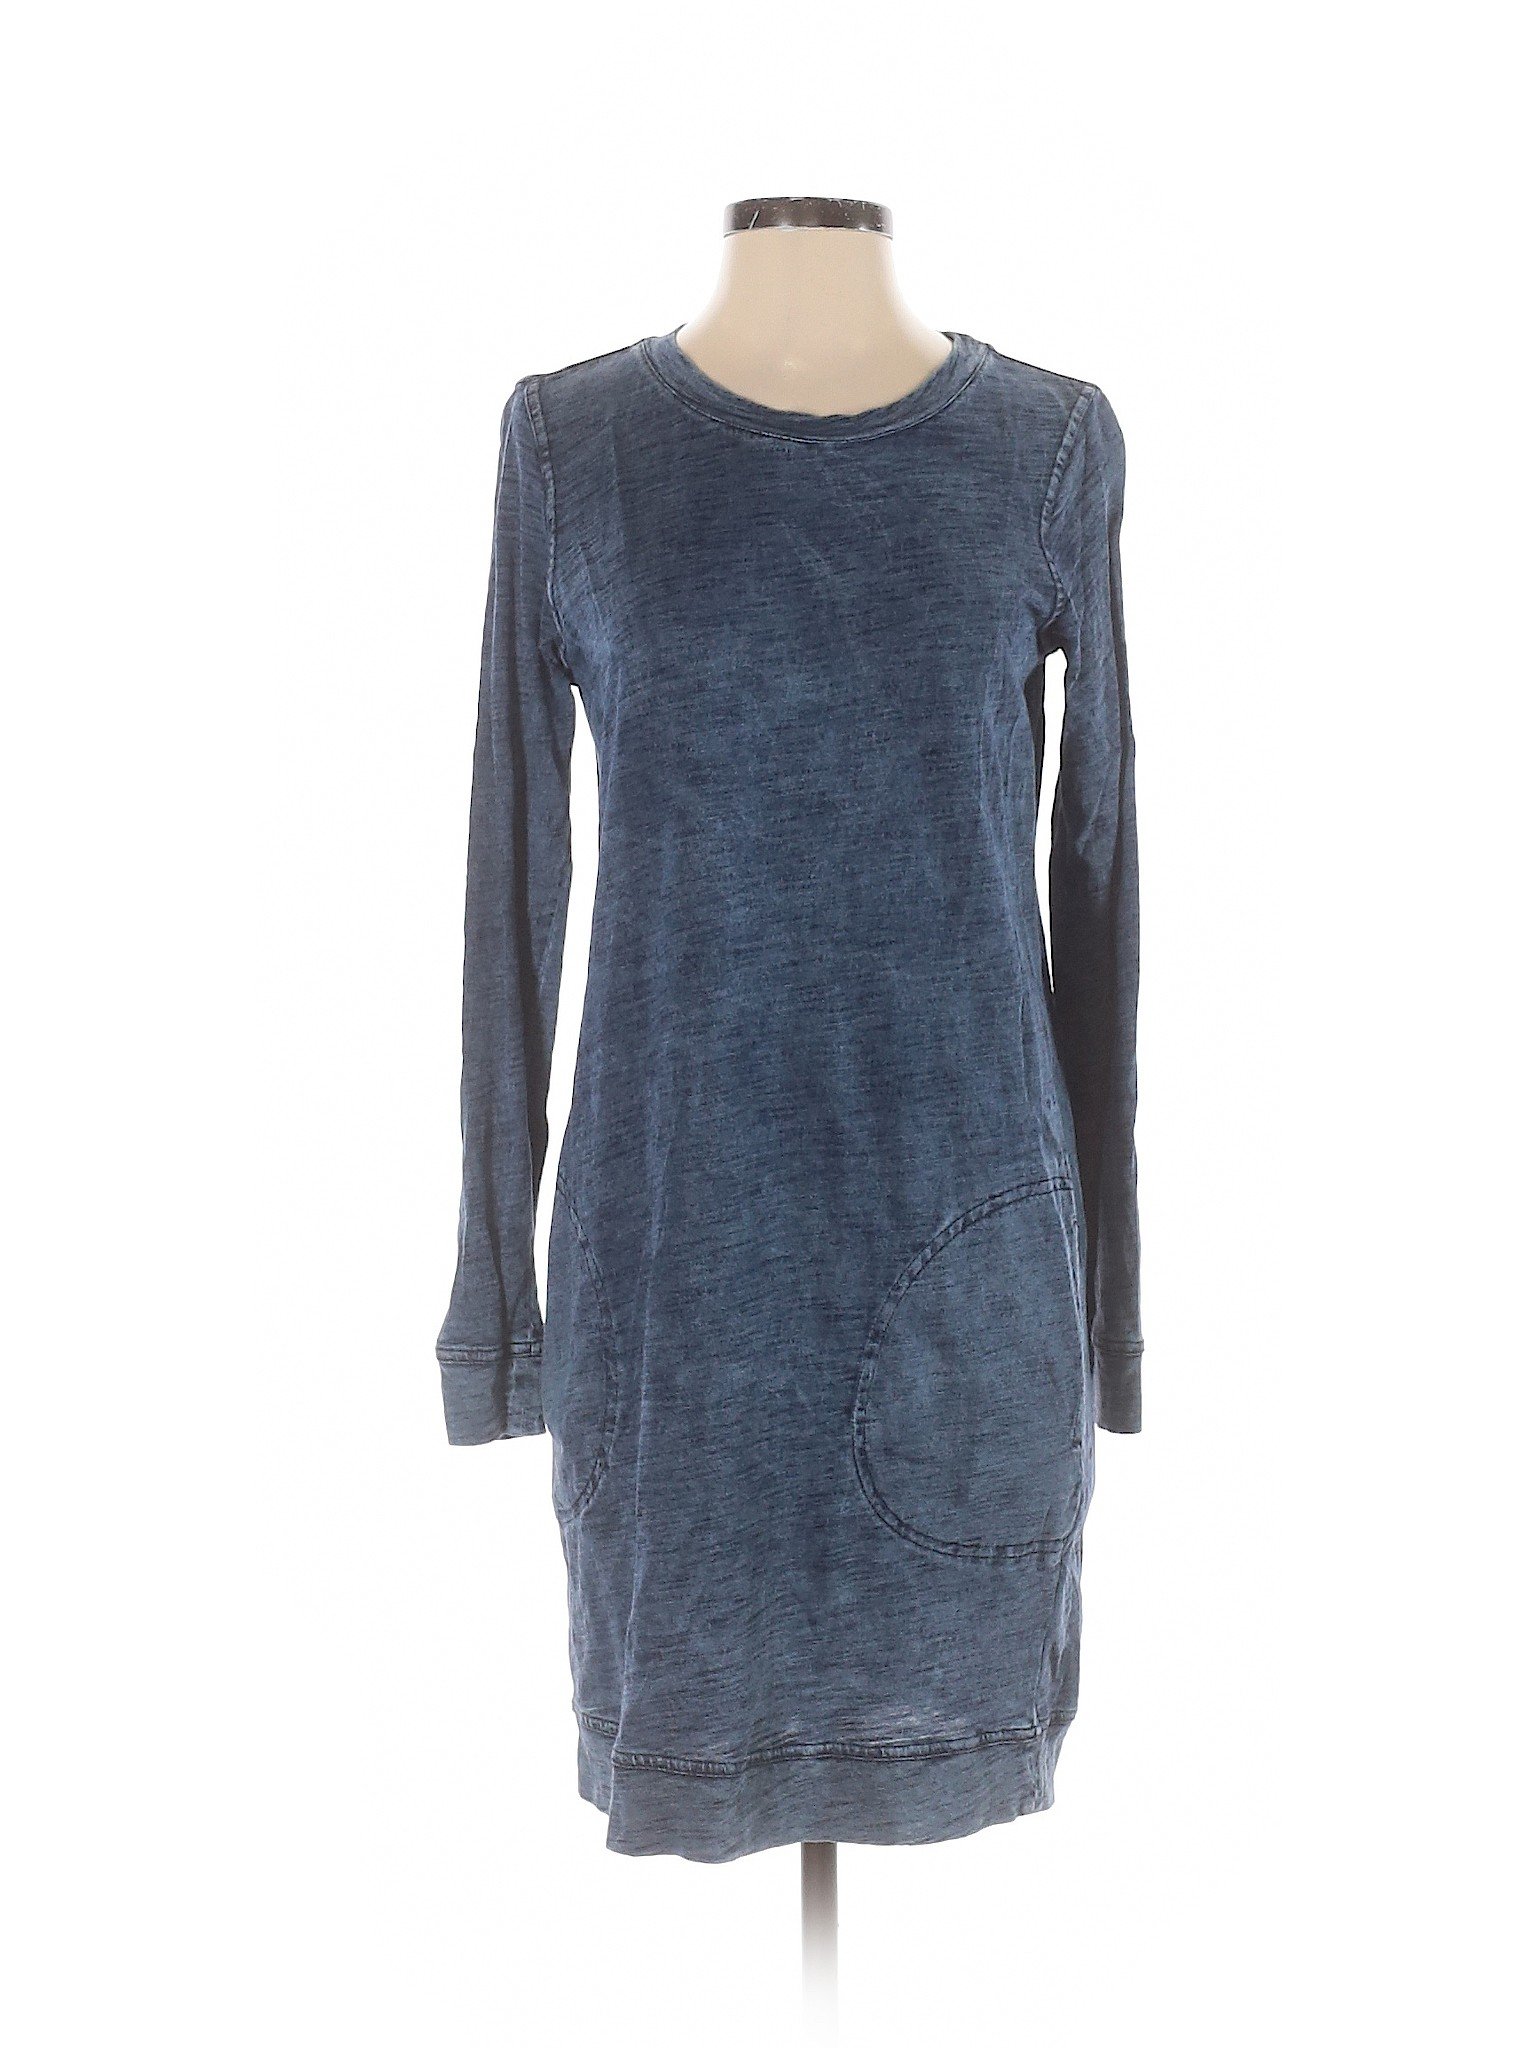 Jane and Delancey Women Blue Casual Dress S | eBay